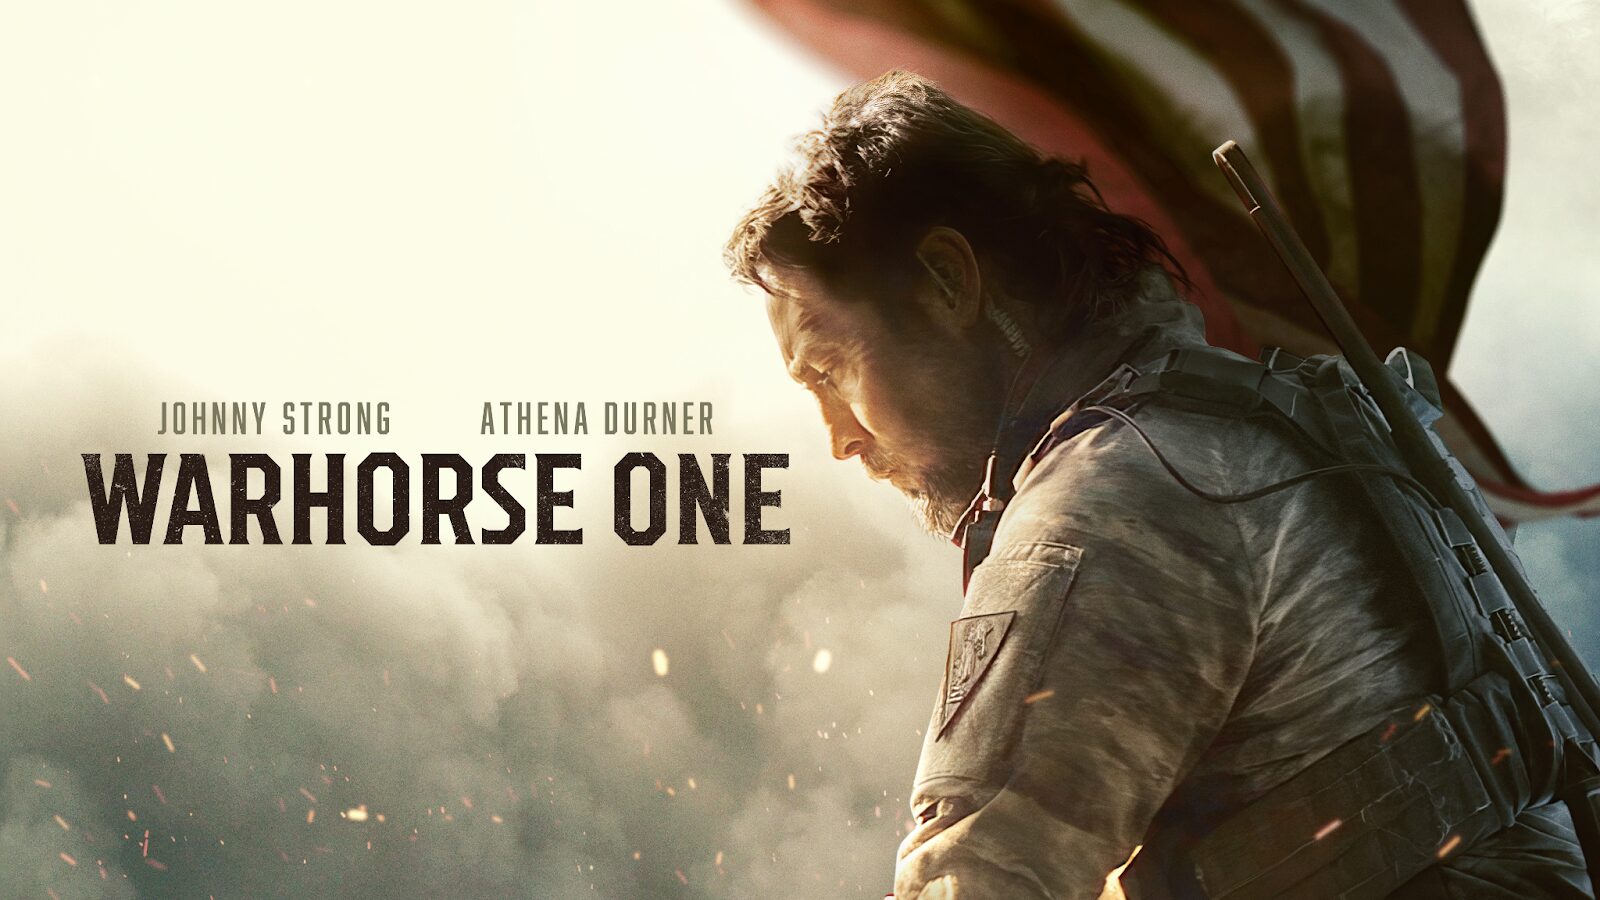 Warhorse One Movie Cast - Watch Online or Download HD